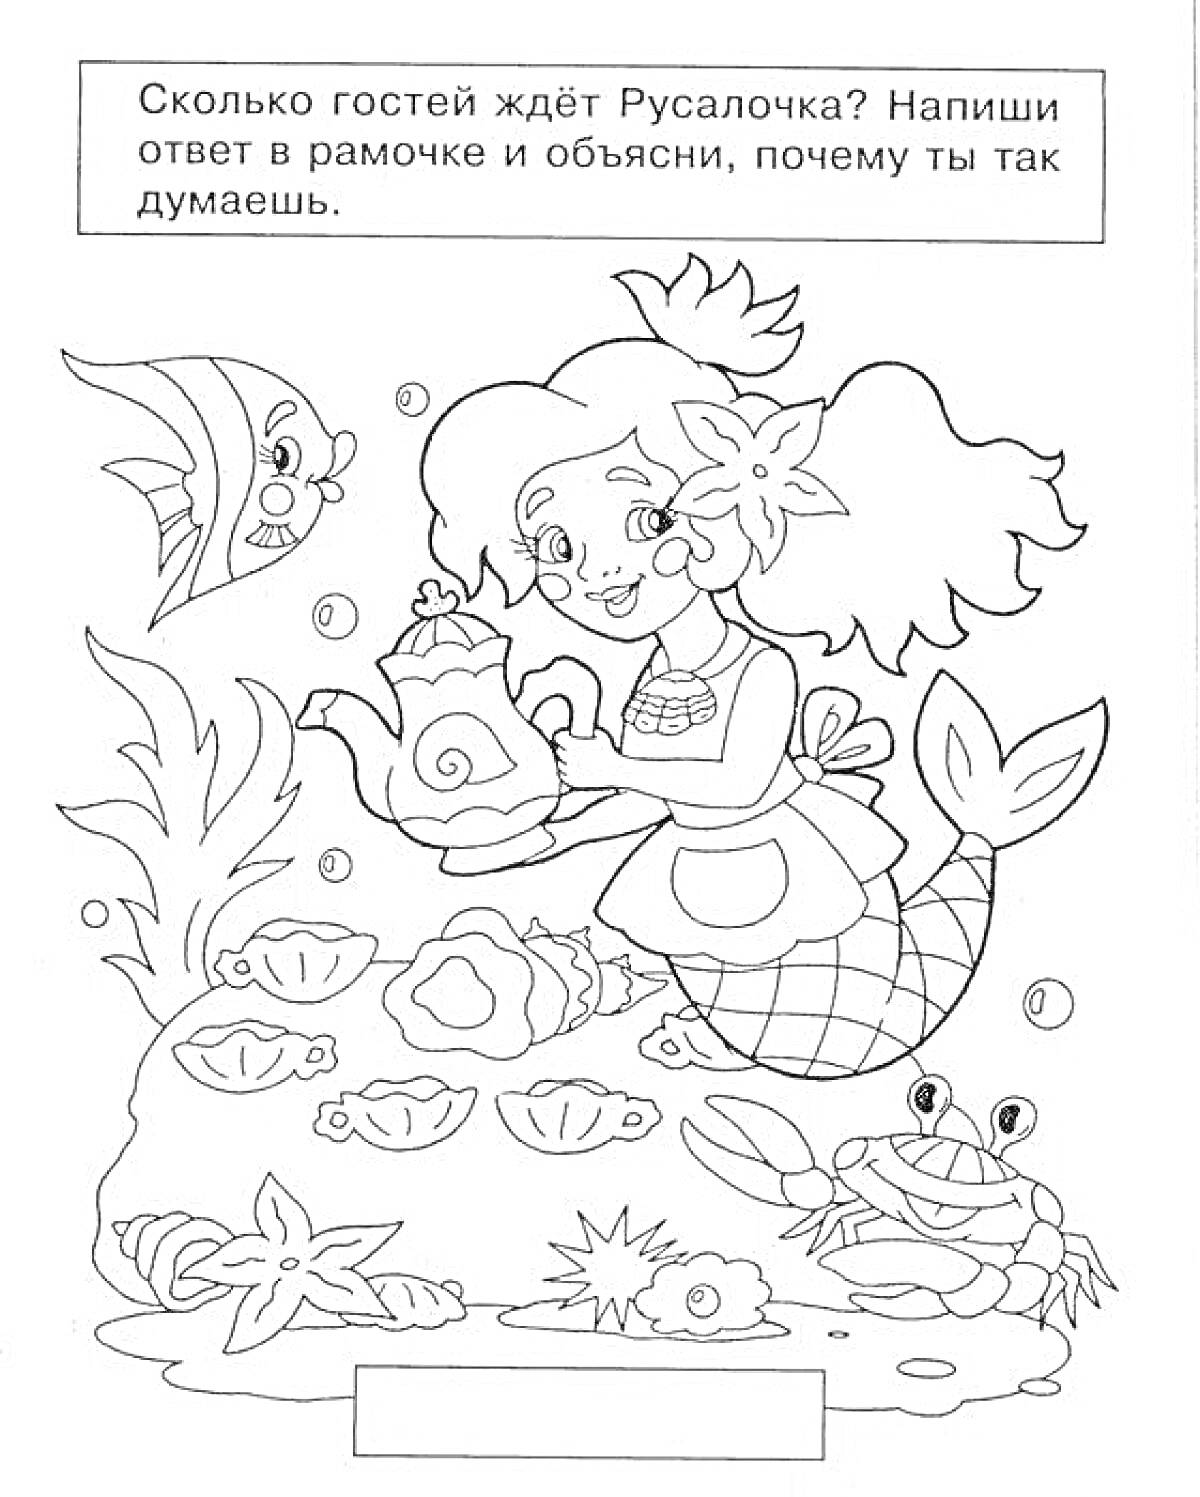 Раскраска Русалочка с чаепитием и друзьями на морском дне (рыбы, краб, морская звезда, ракушки)